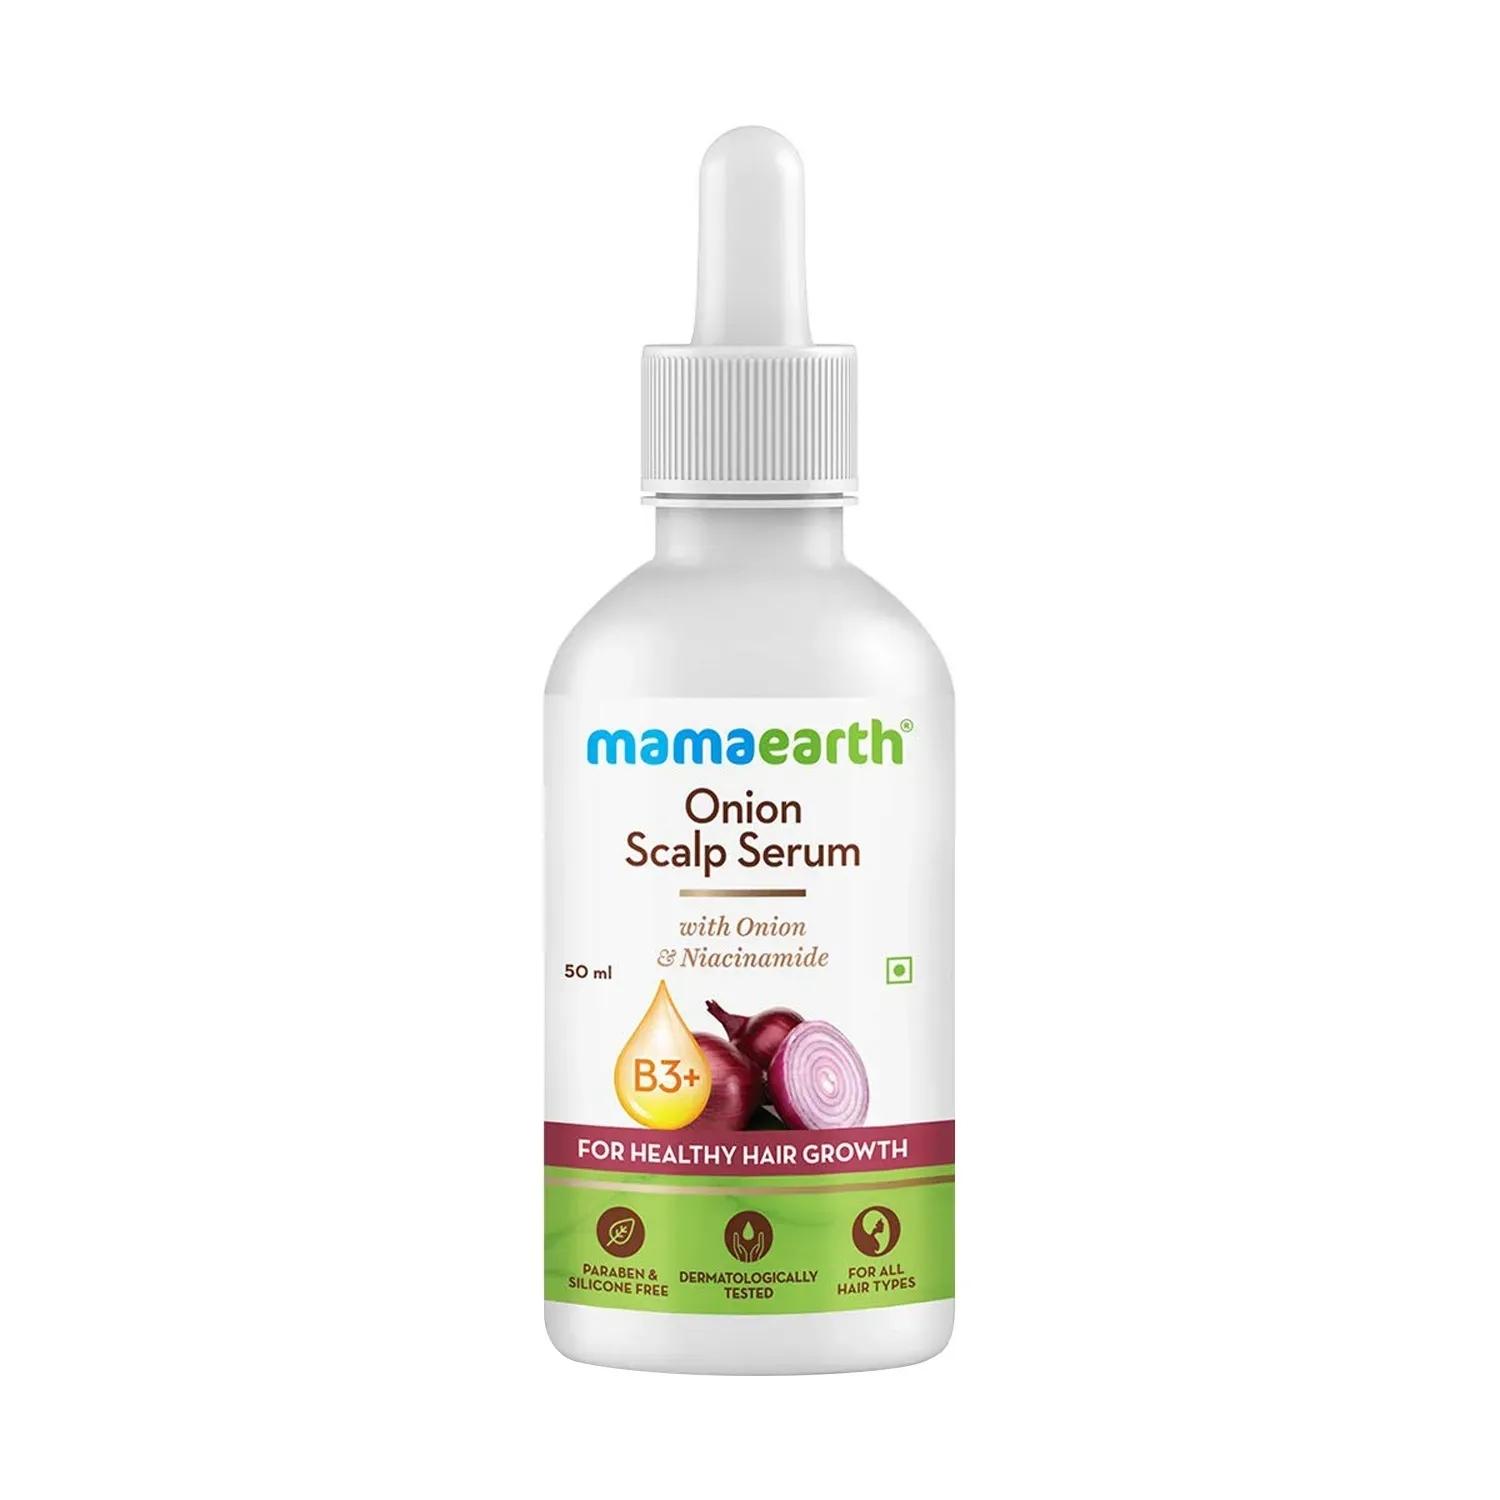 mamaearth onion scalp serum (50ml)